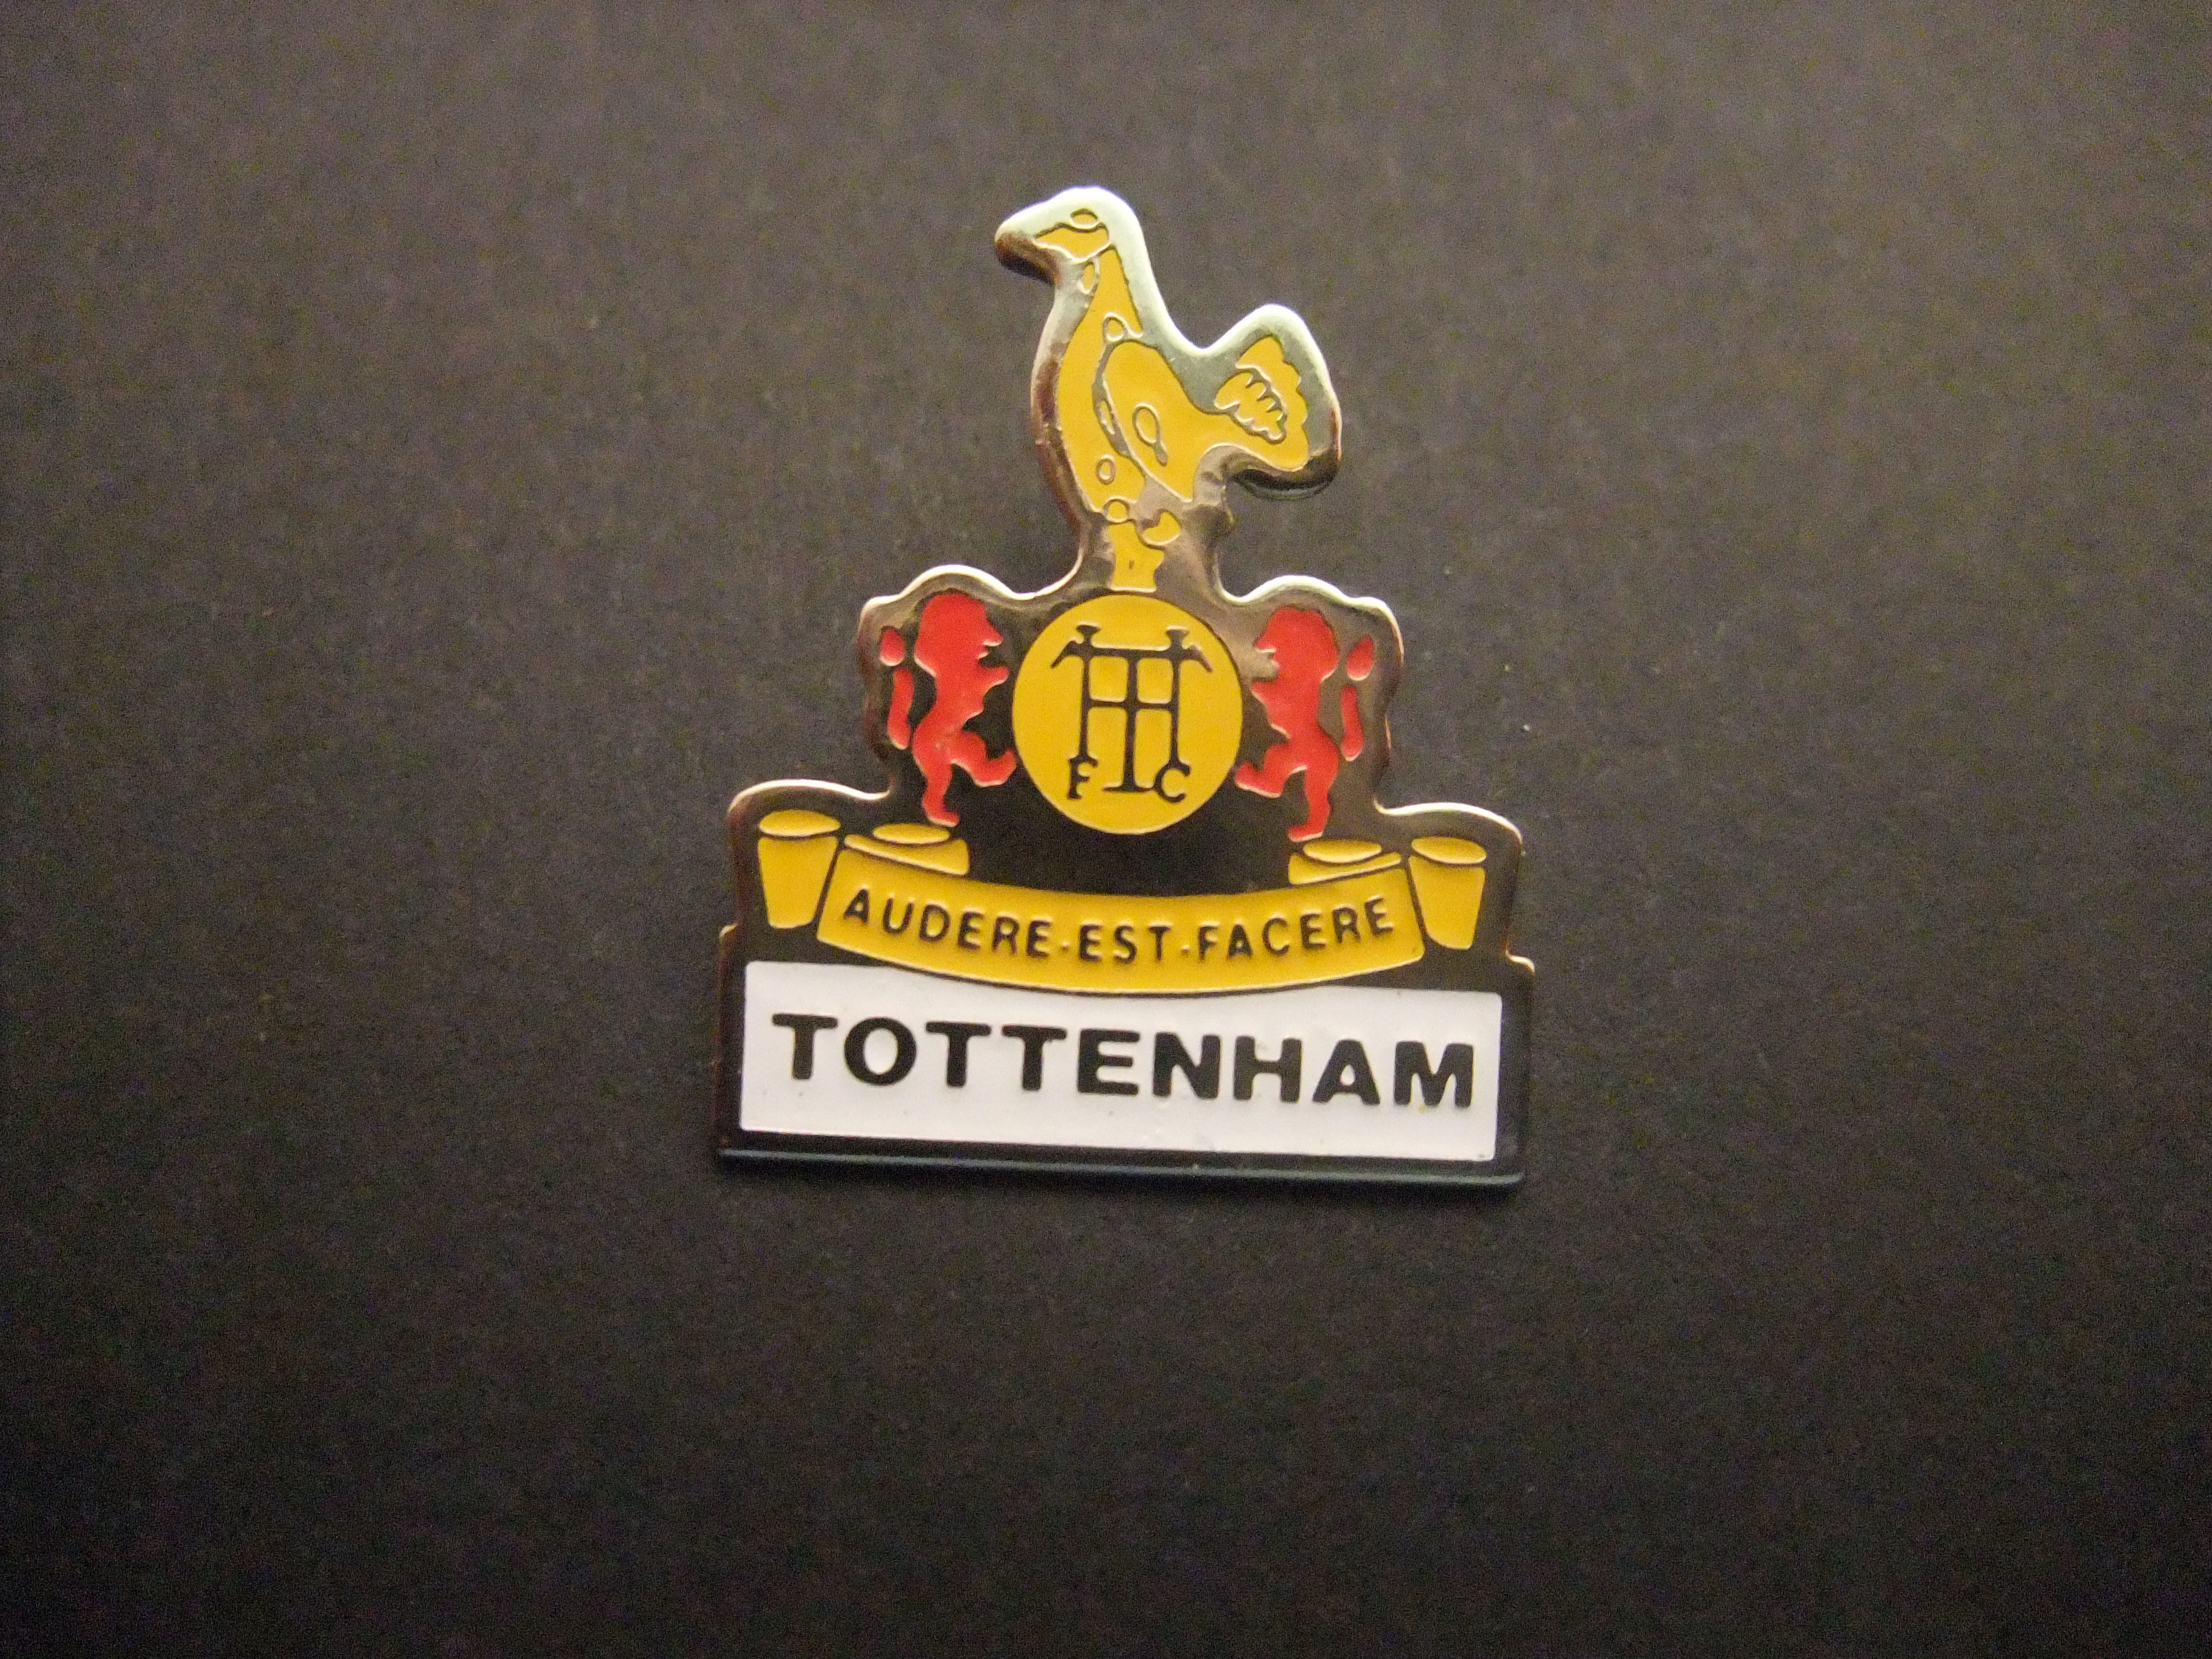 Tottenham Hotspur Football Club ( Spurs, Tottenham)